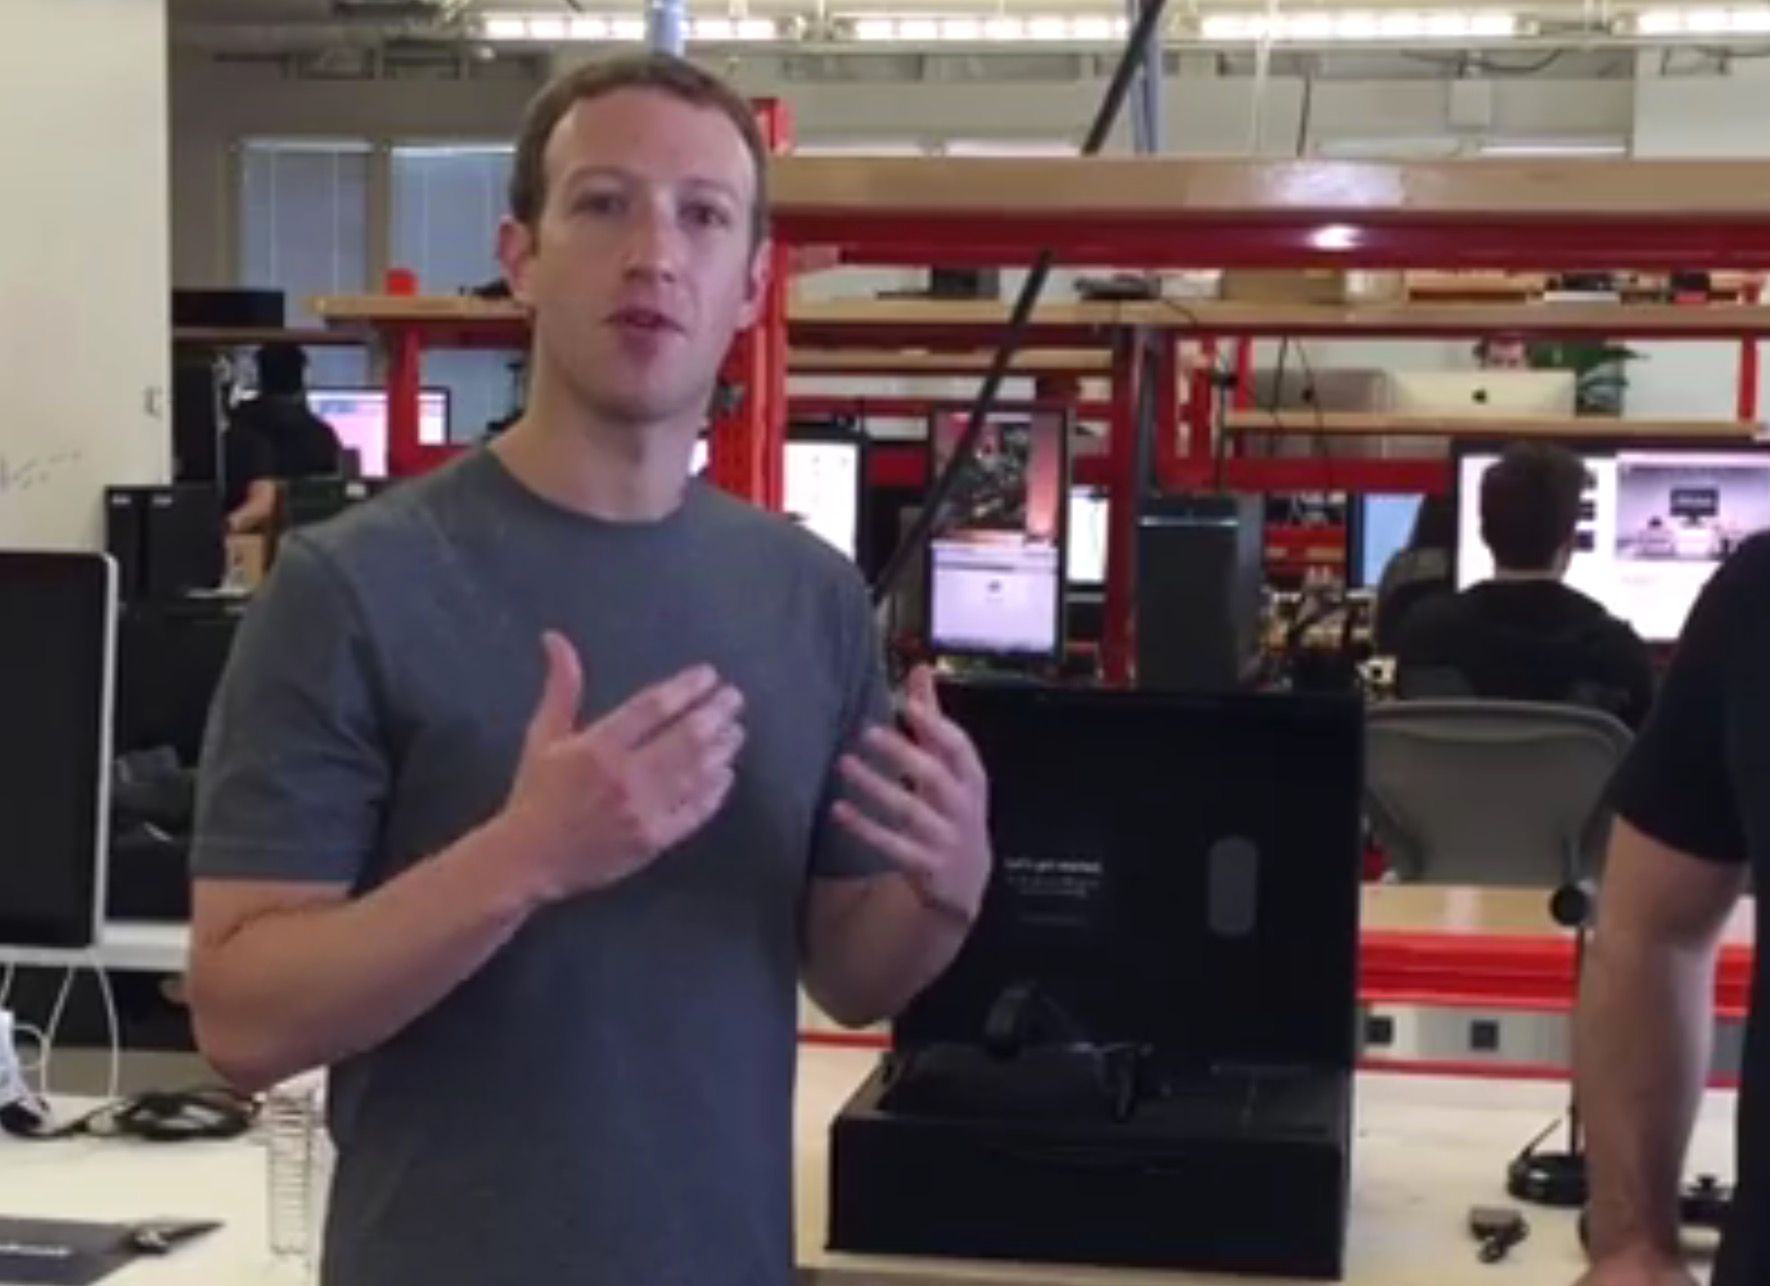 watch mark zuckerberg unbox retail oculus rift via facebook livestream image 1